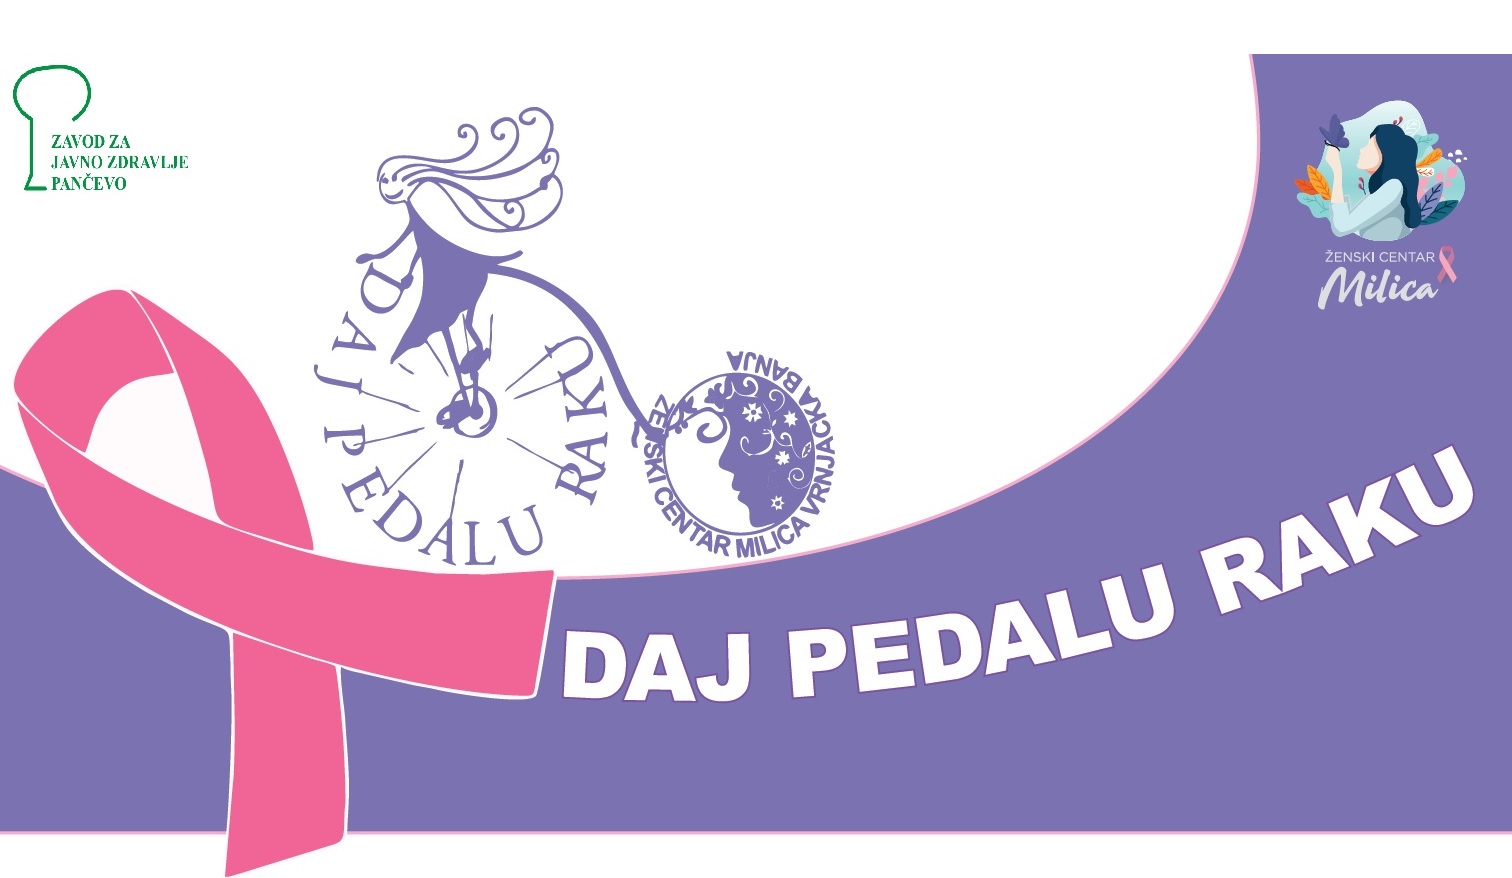 Biciklistička vožnja "Daj pedalu raku" 1. oktobra u Pančevu